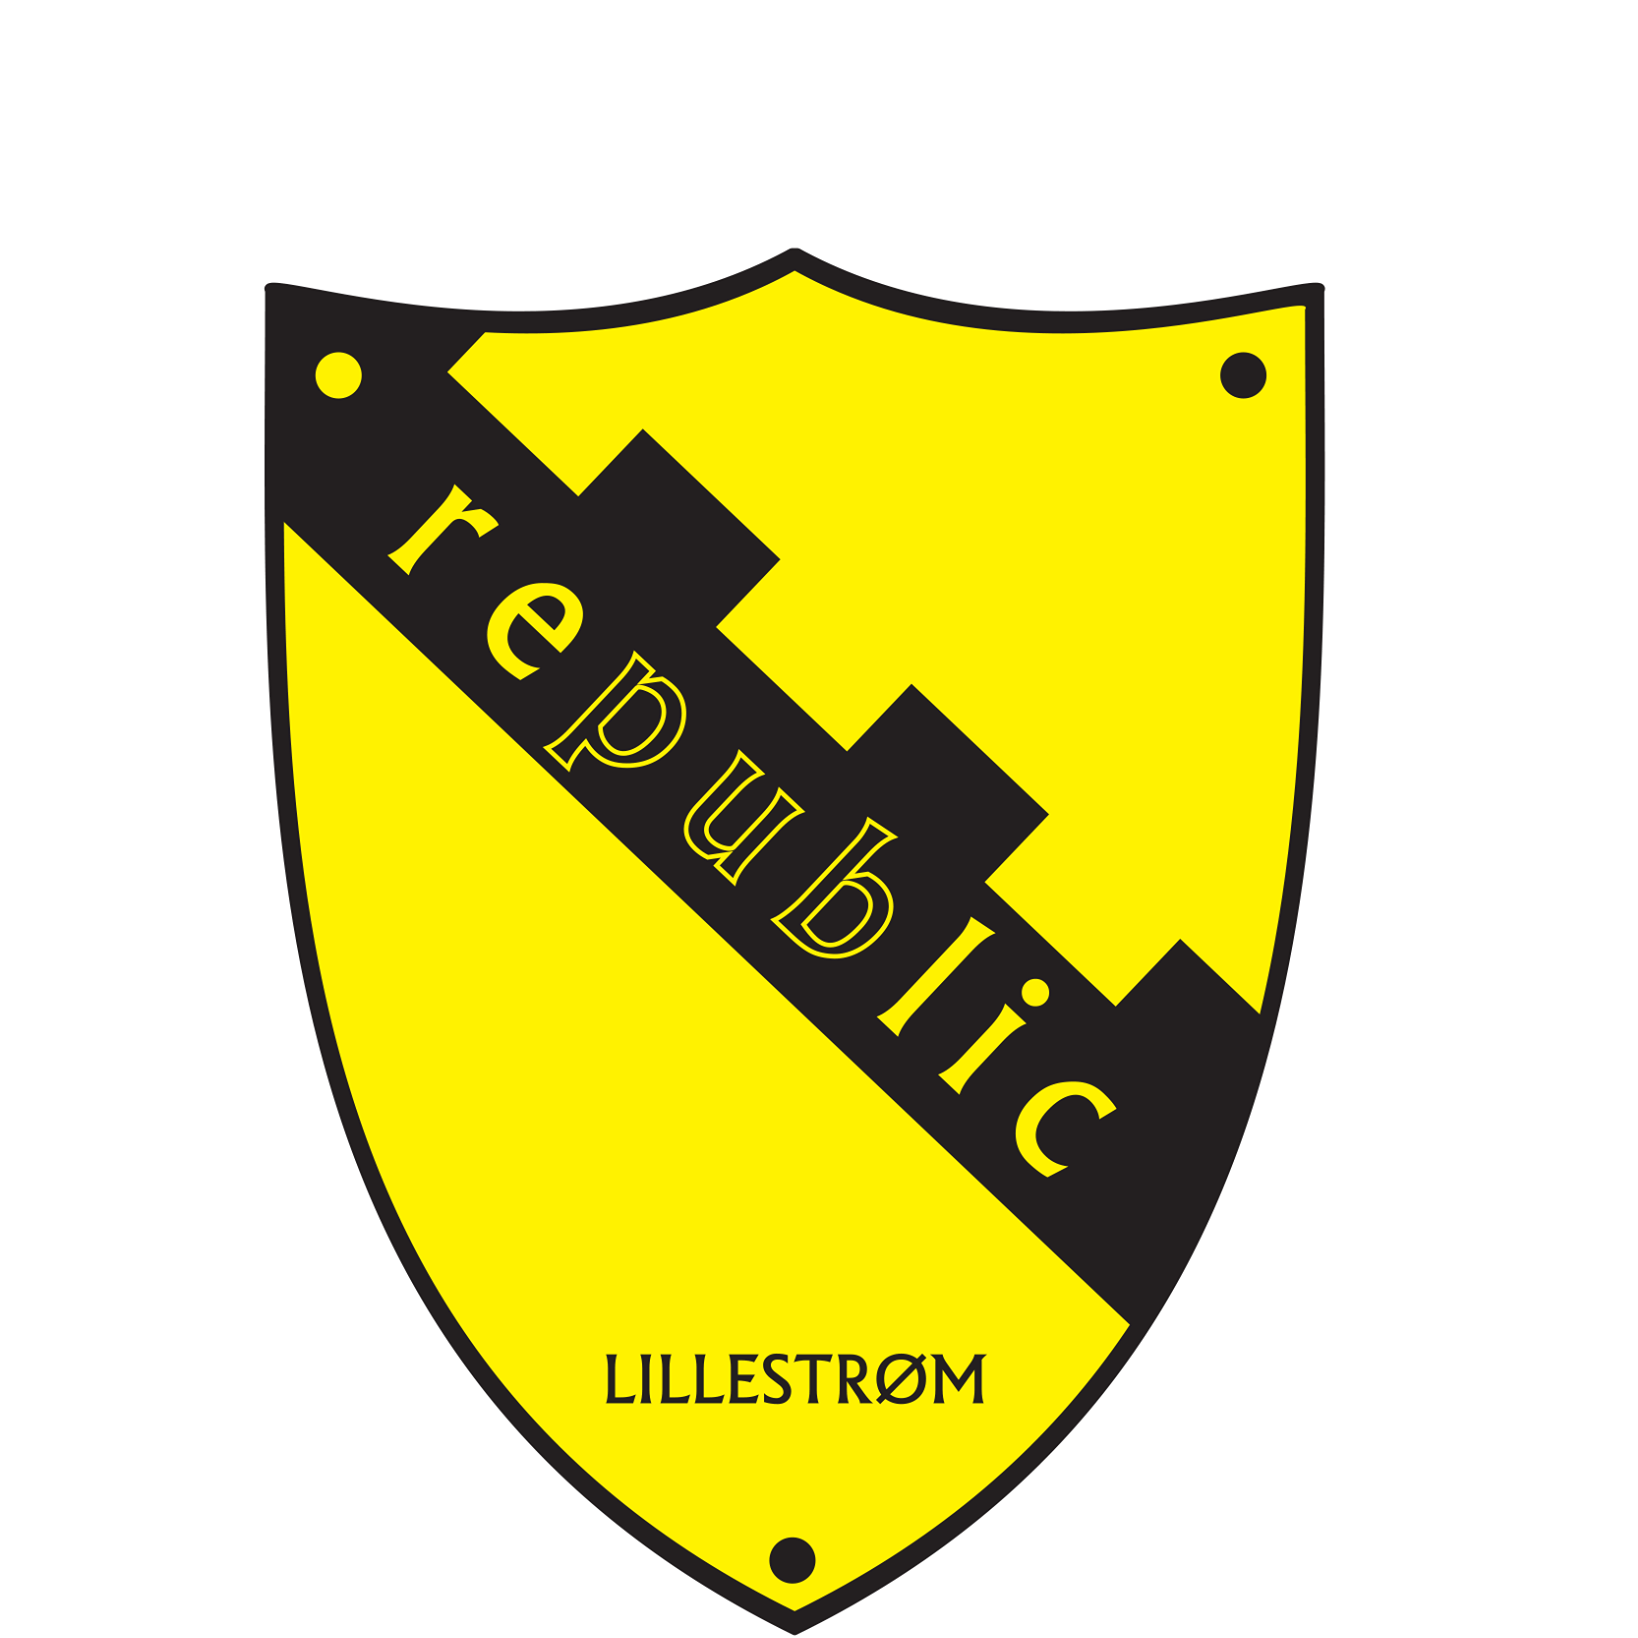 Republic Lillestrm